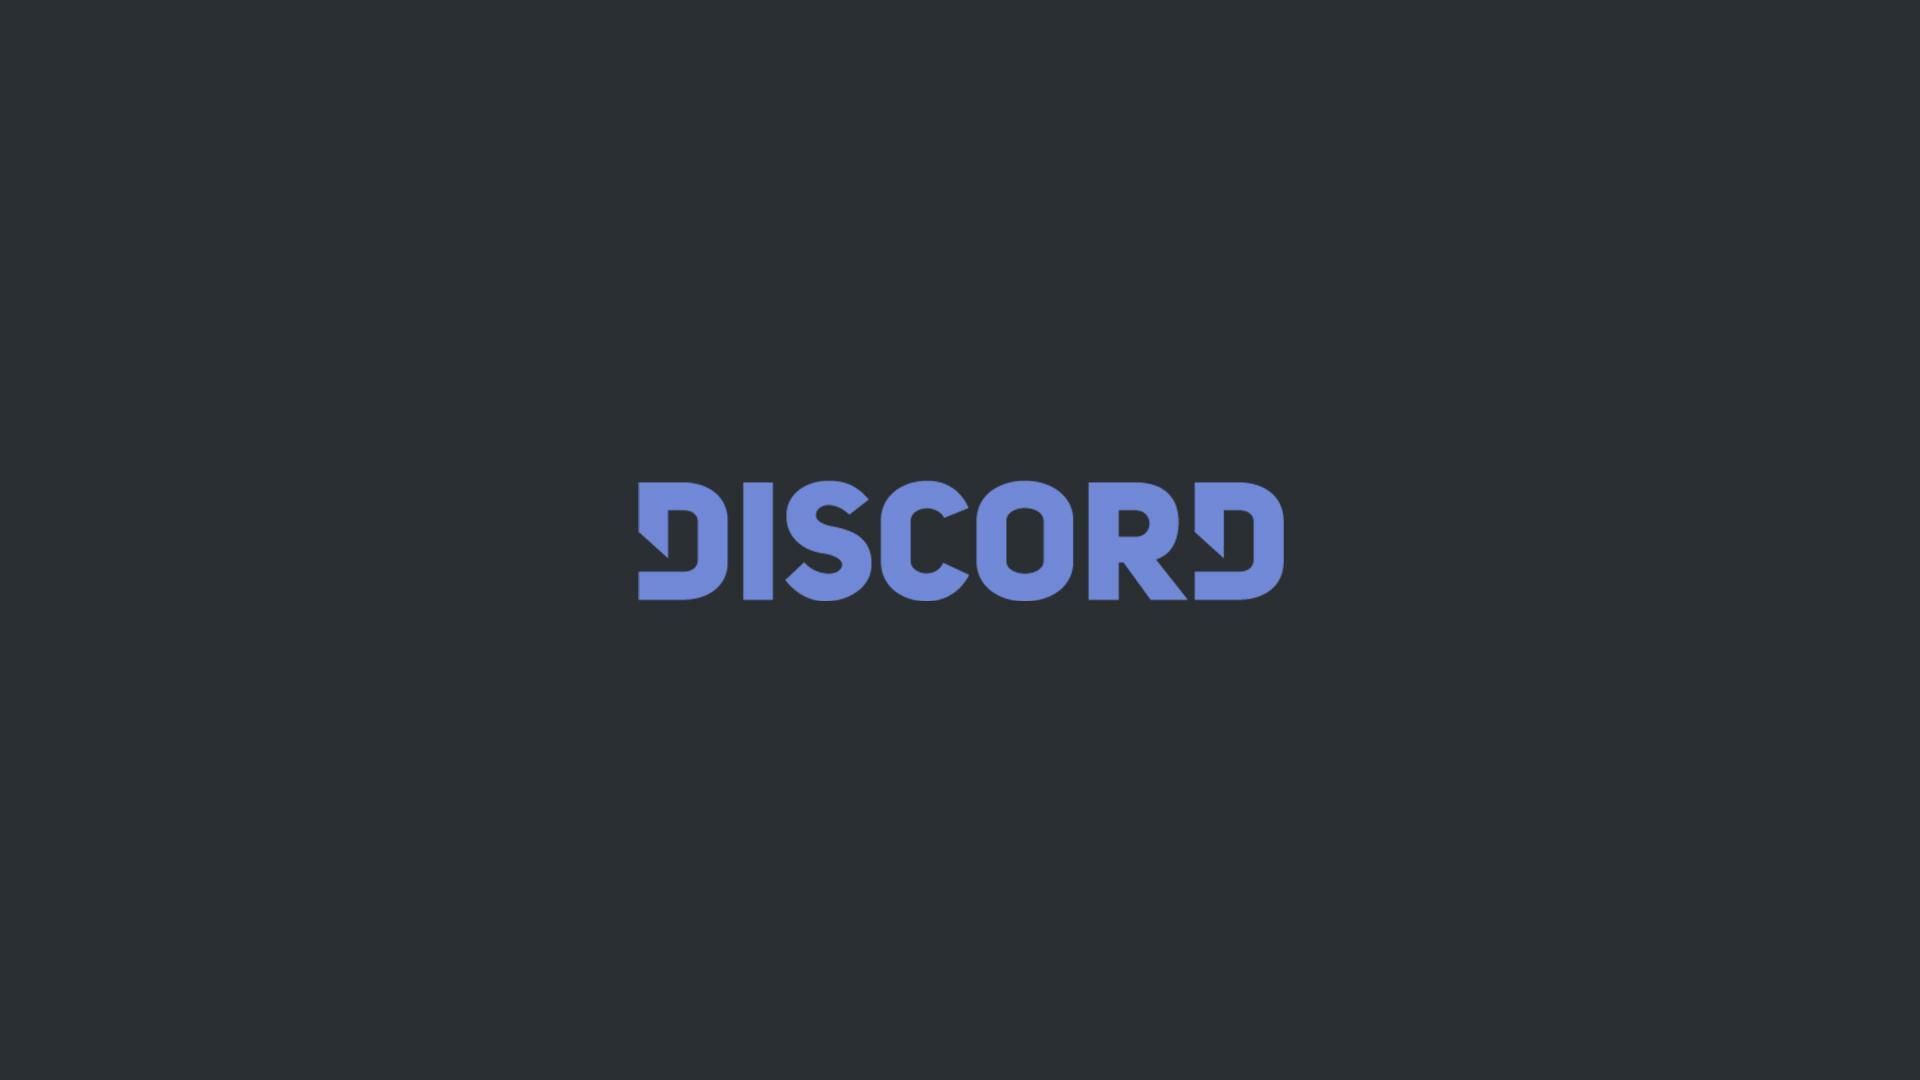 Discord wallpaper [DOWNLOAD FREE]